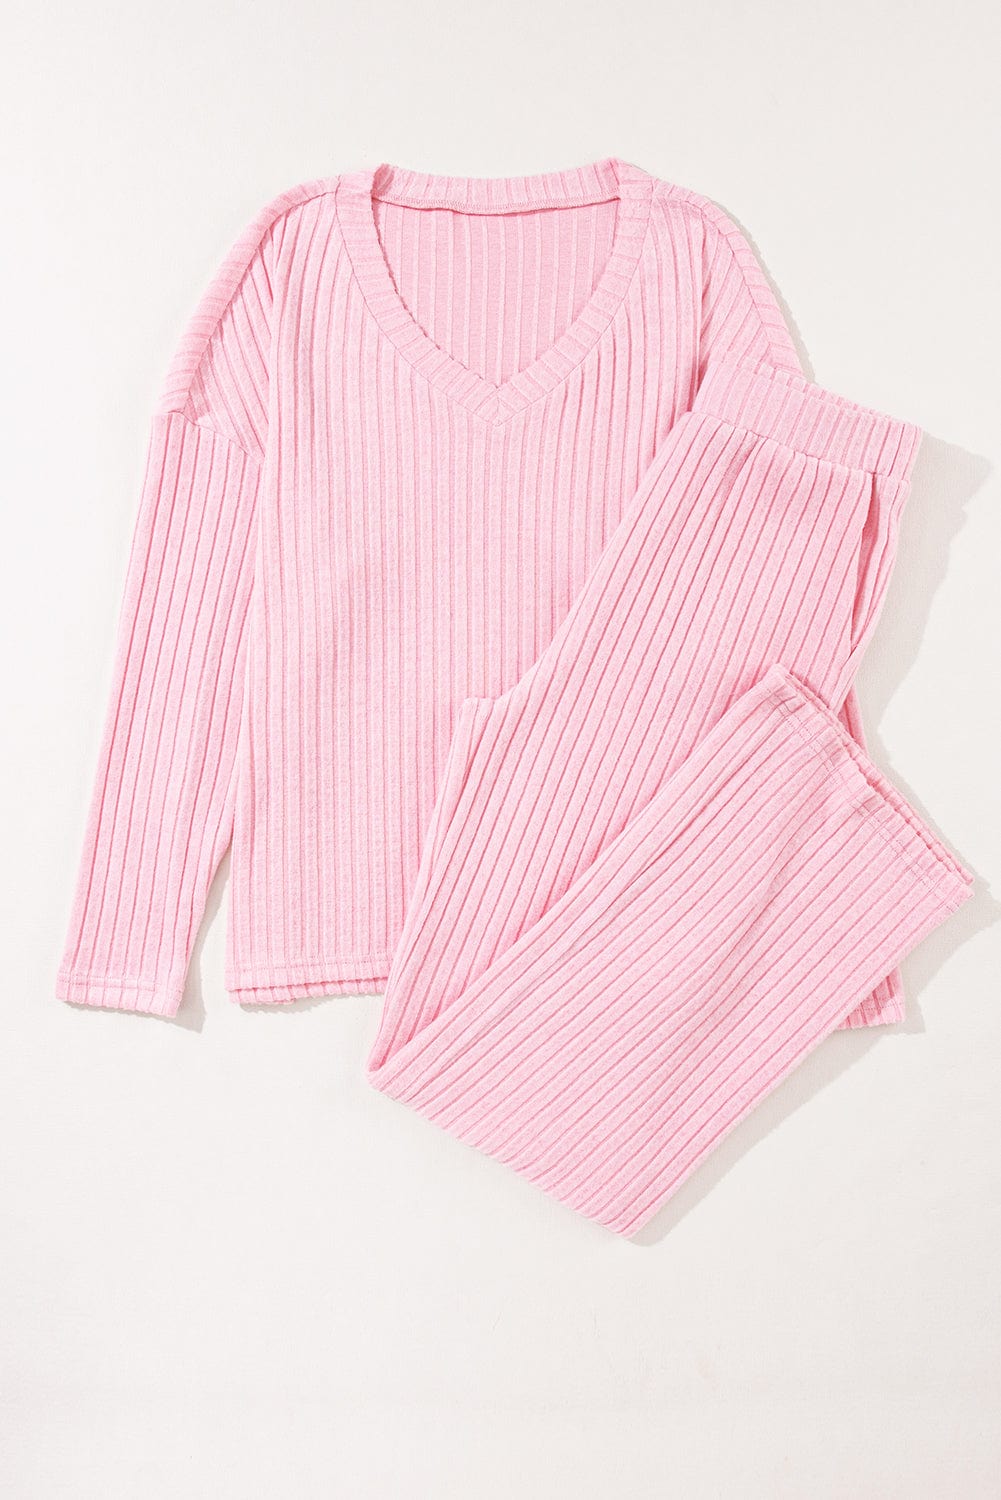 Shoppe EZR Loungewear & Sleepwear/Loungewear Light Pink Ribbed Knit V Neck Slouchy Two-piece Outfit